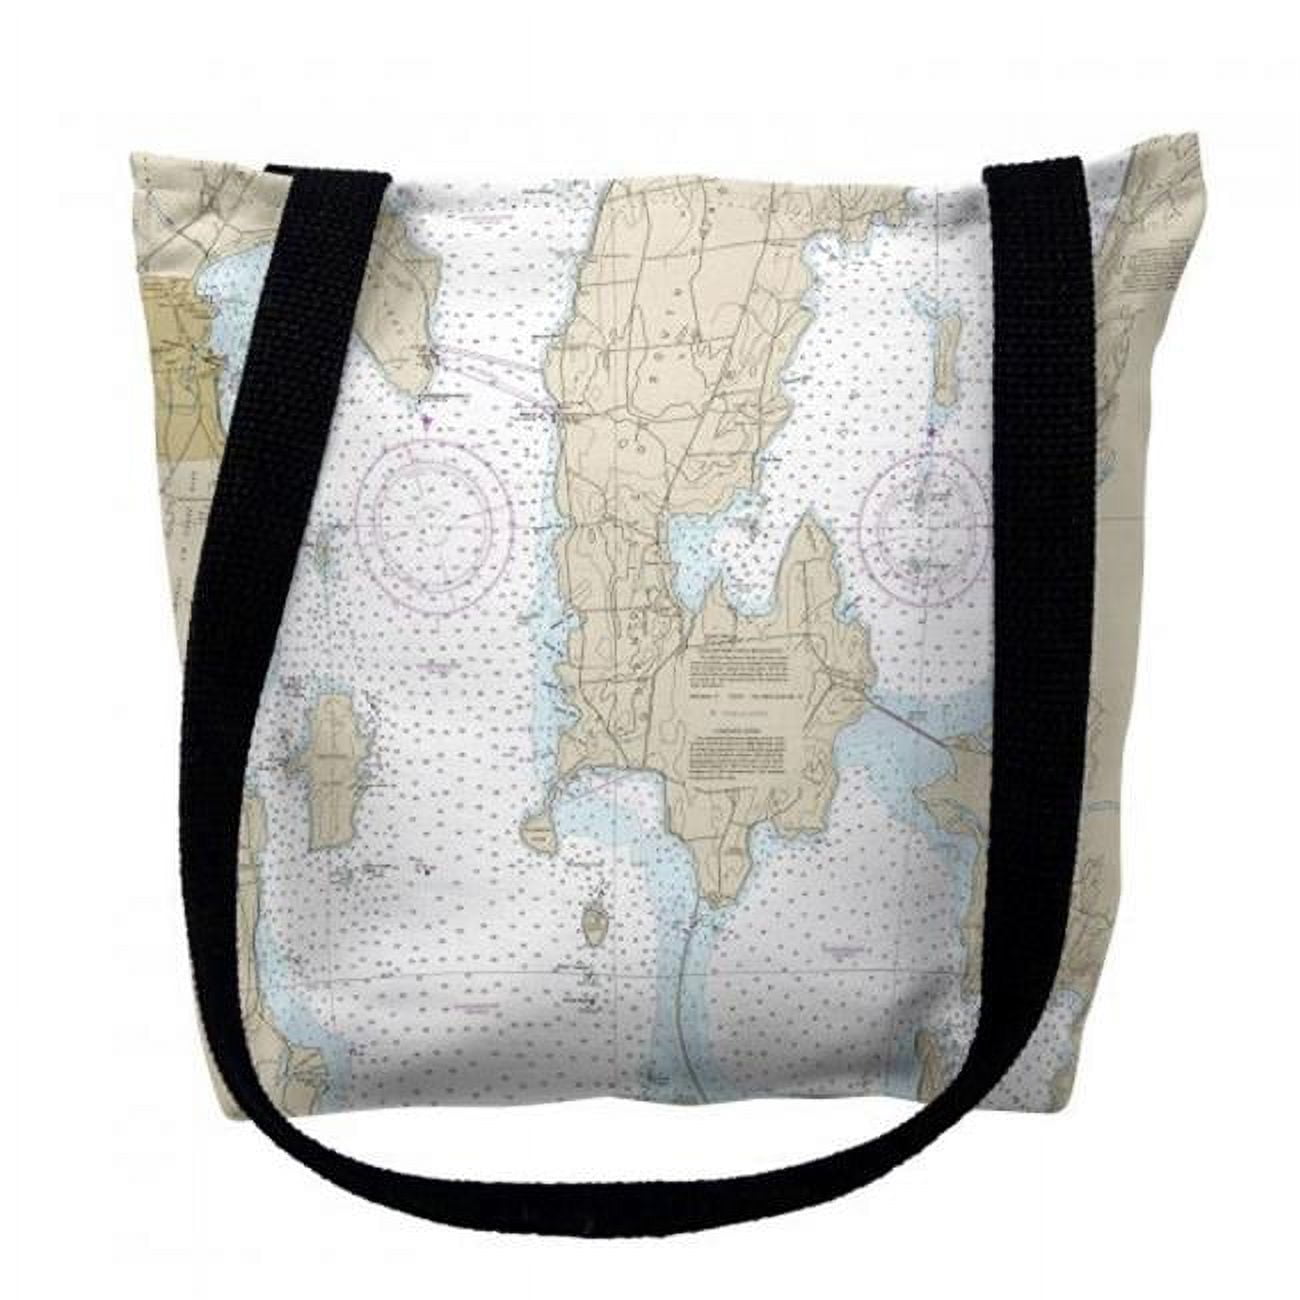 Ty14782m 16 X 16 In. South Hero Island Vermont Nautical Map Tote Bag - Medium